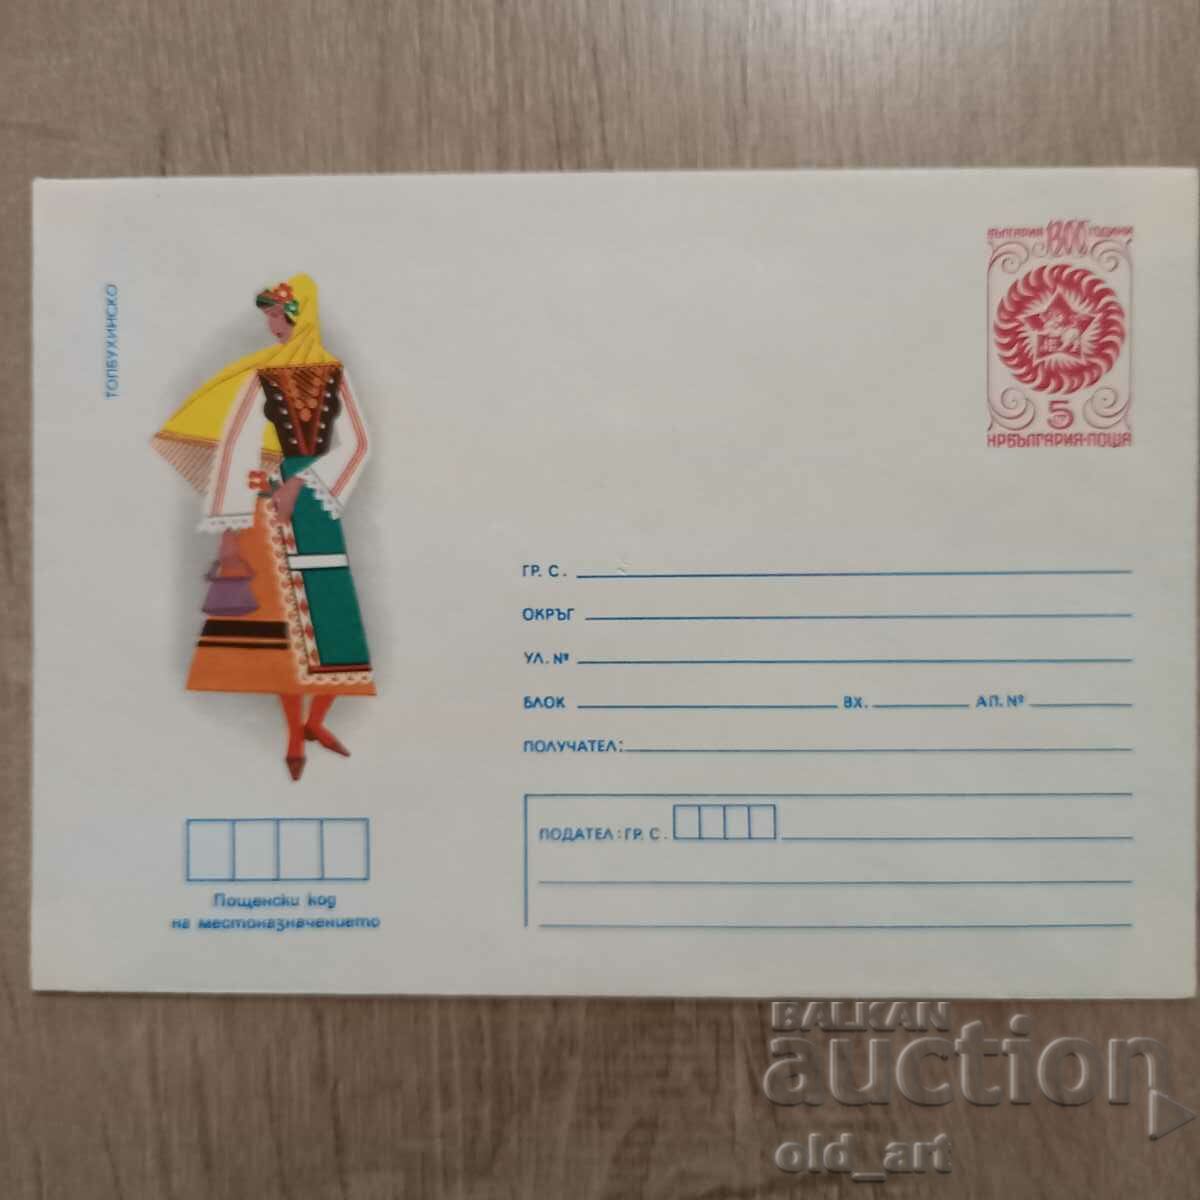 Postal envelope - Folk costumes - Tolbukhinsk